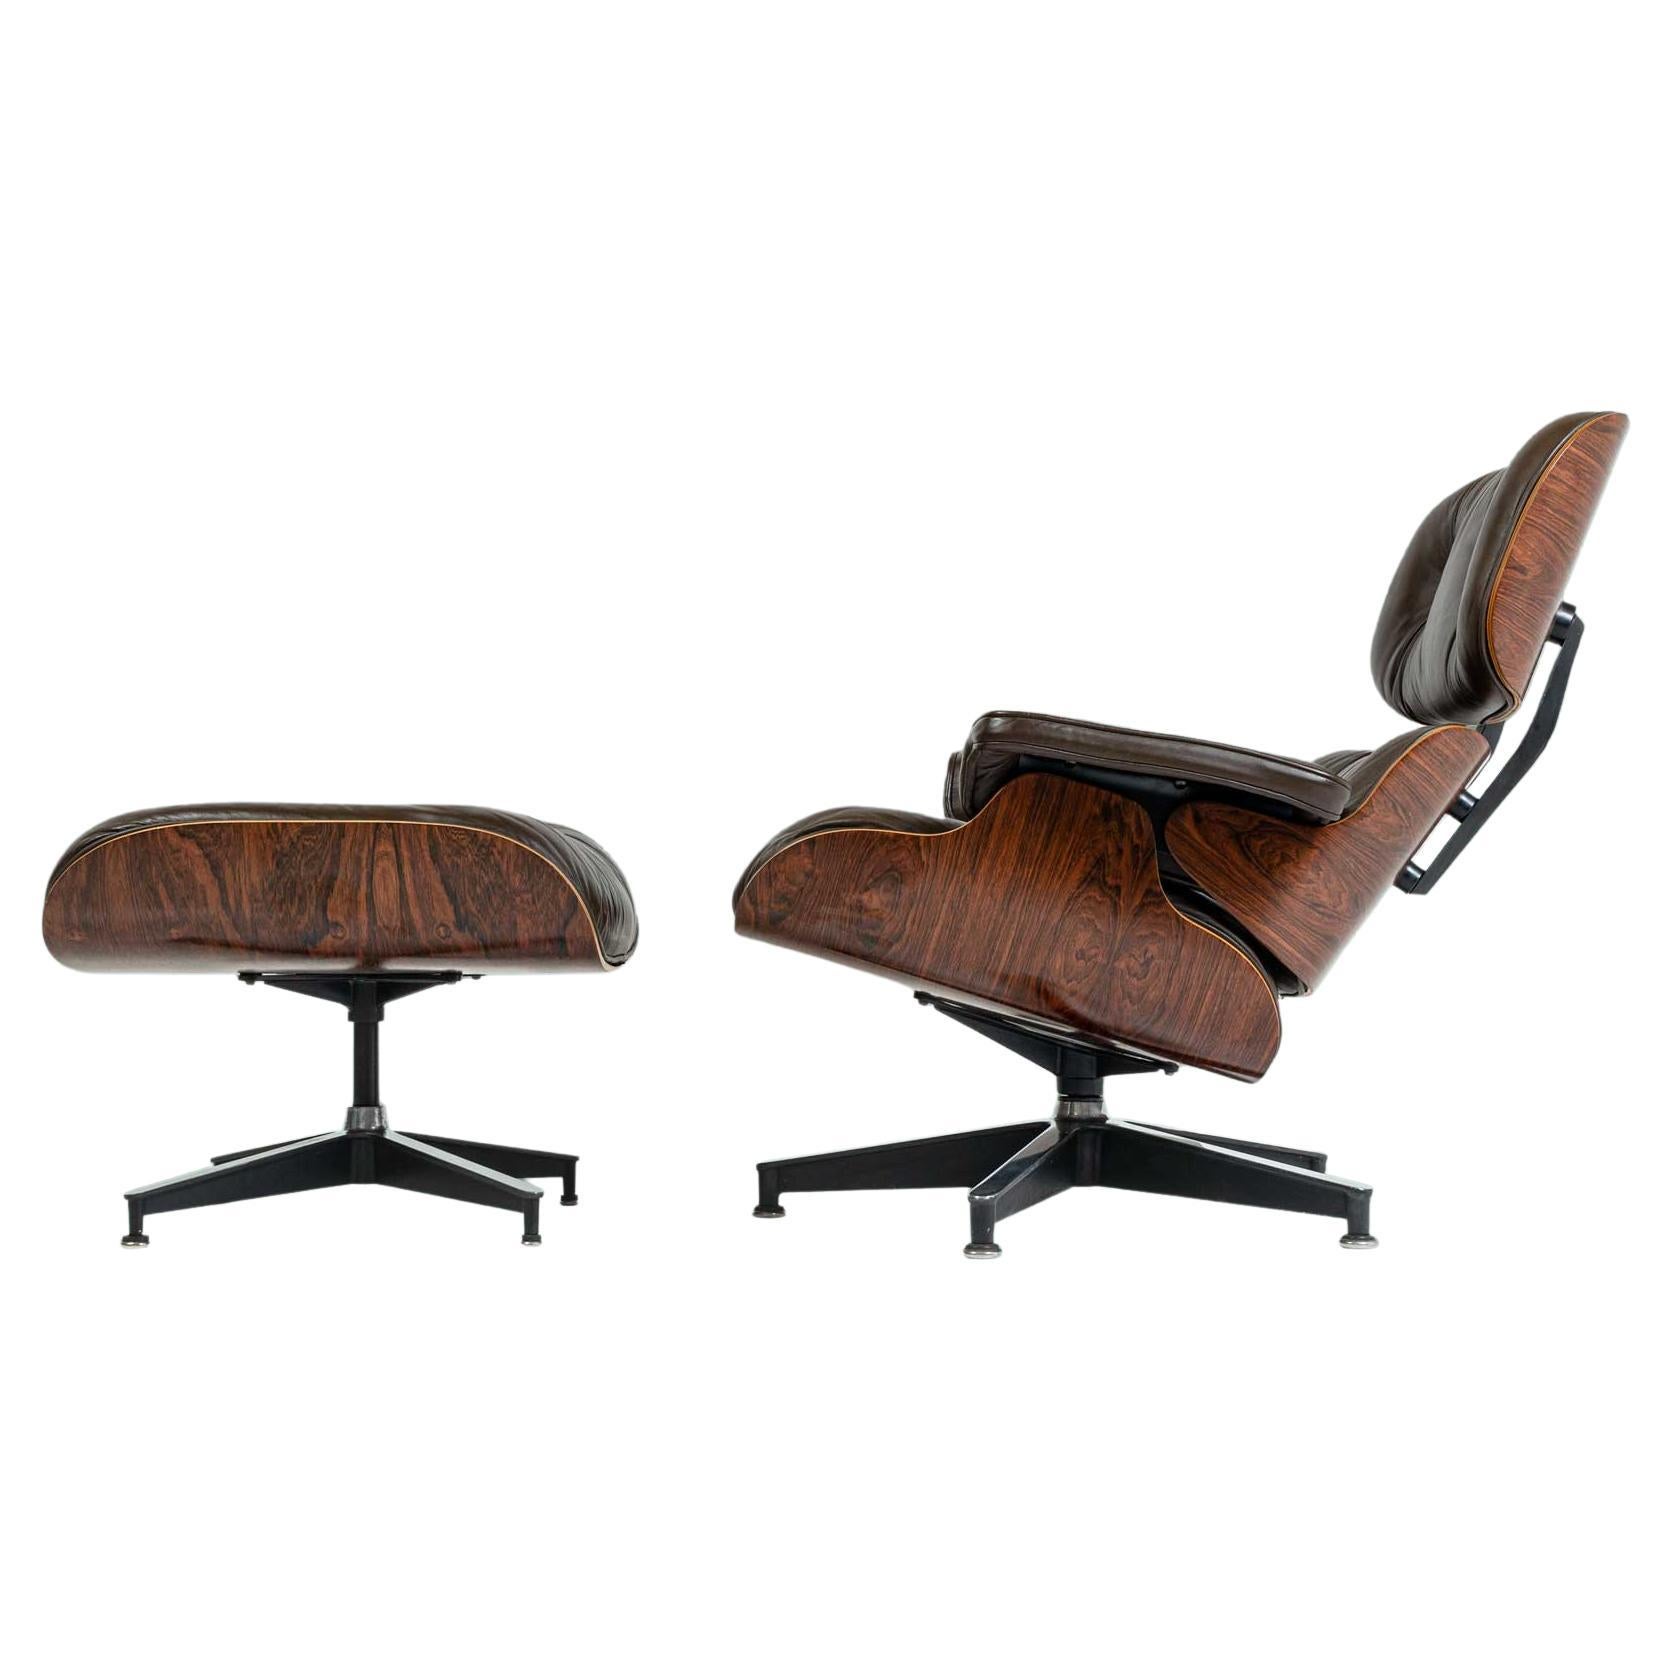 Who makes the original Eames chair?